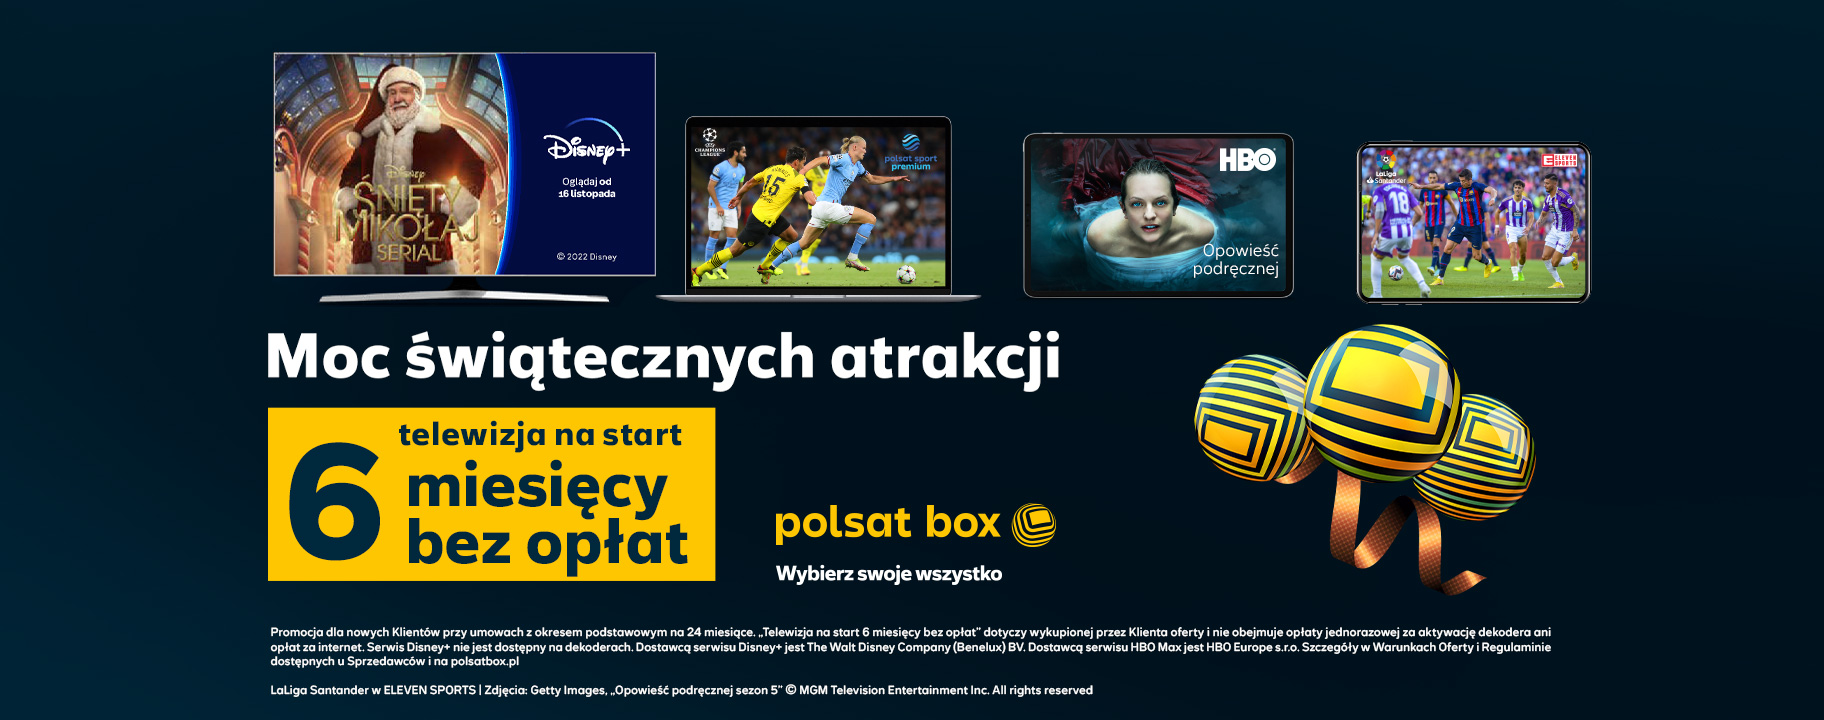 Polsat Box - promocje na święta